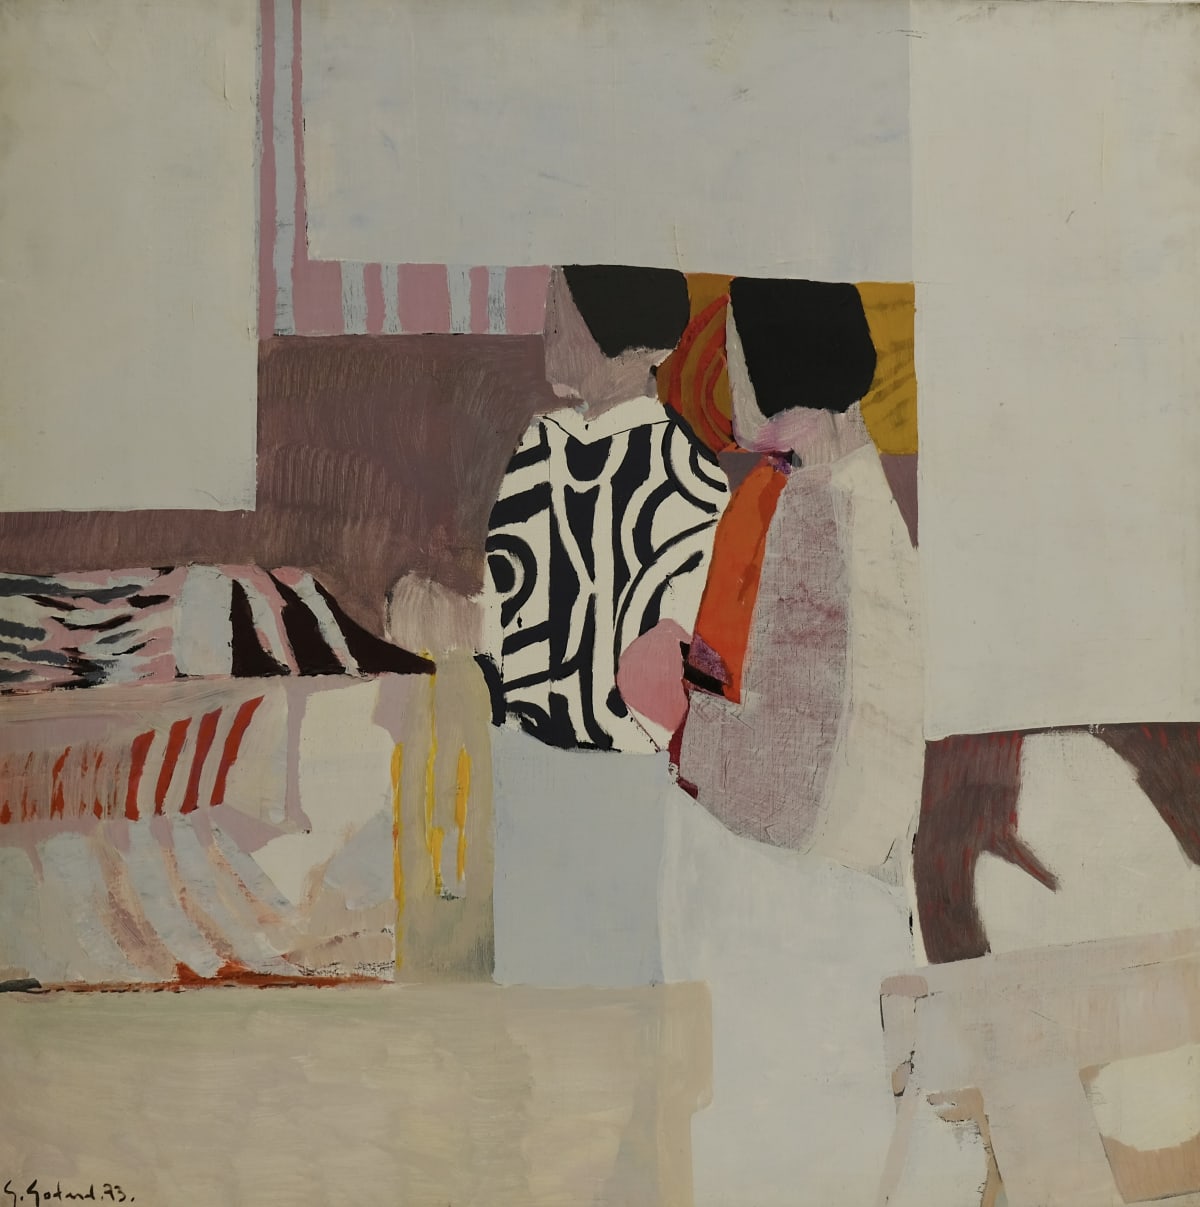 Gabriel Godard's figurative exploration of color and shapes, Laveuses